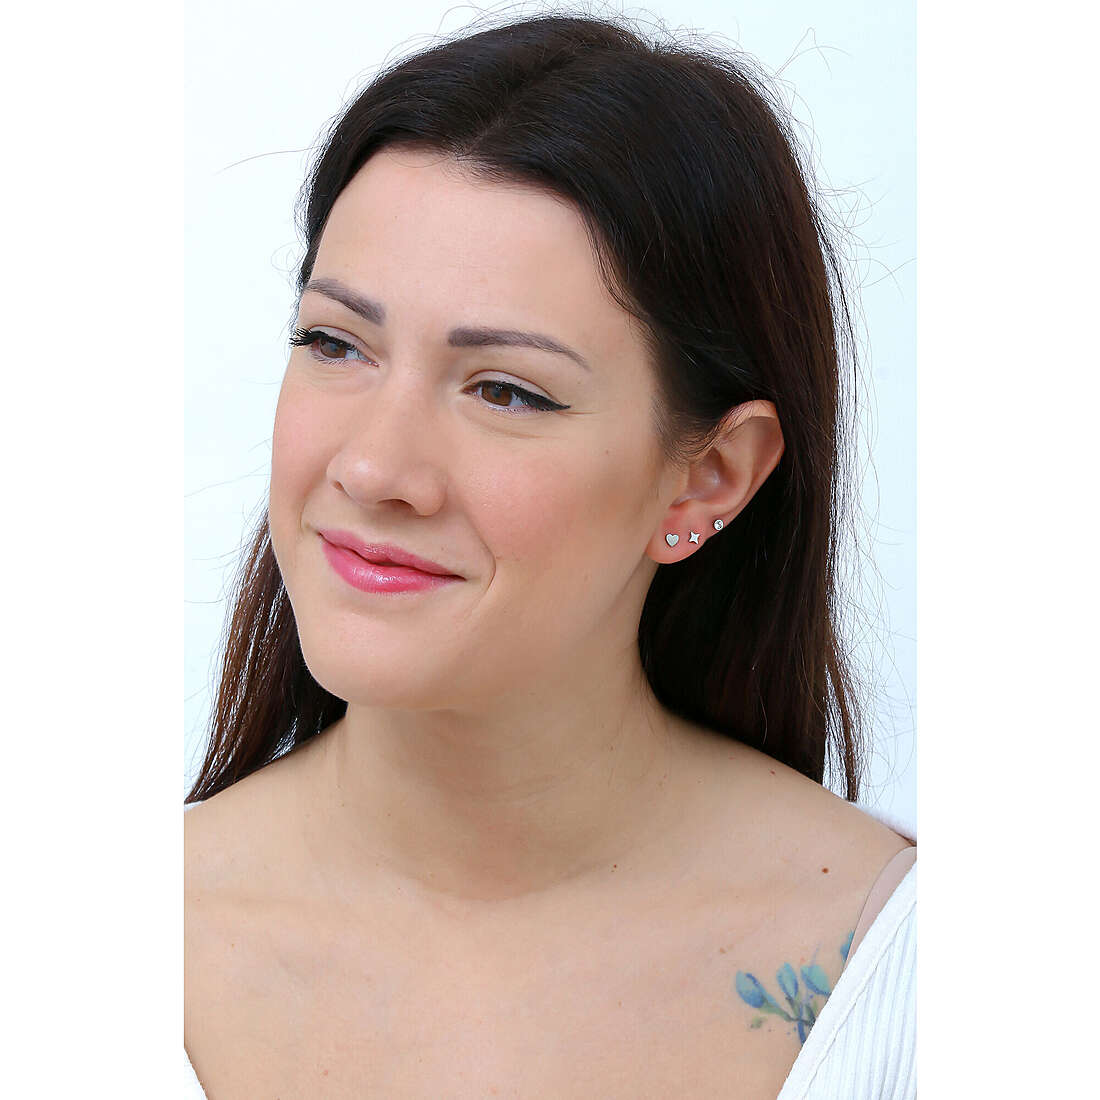 Sagapò earrings Click woman SCK163 wearing